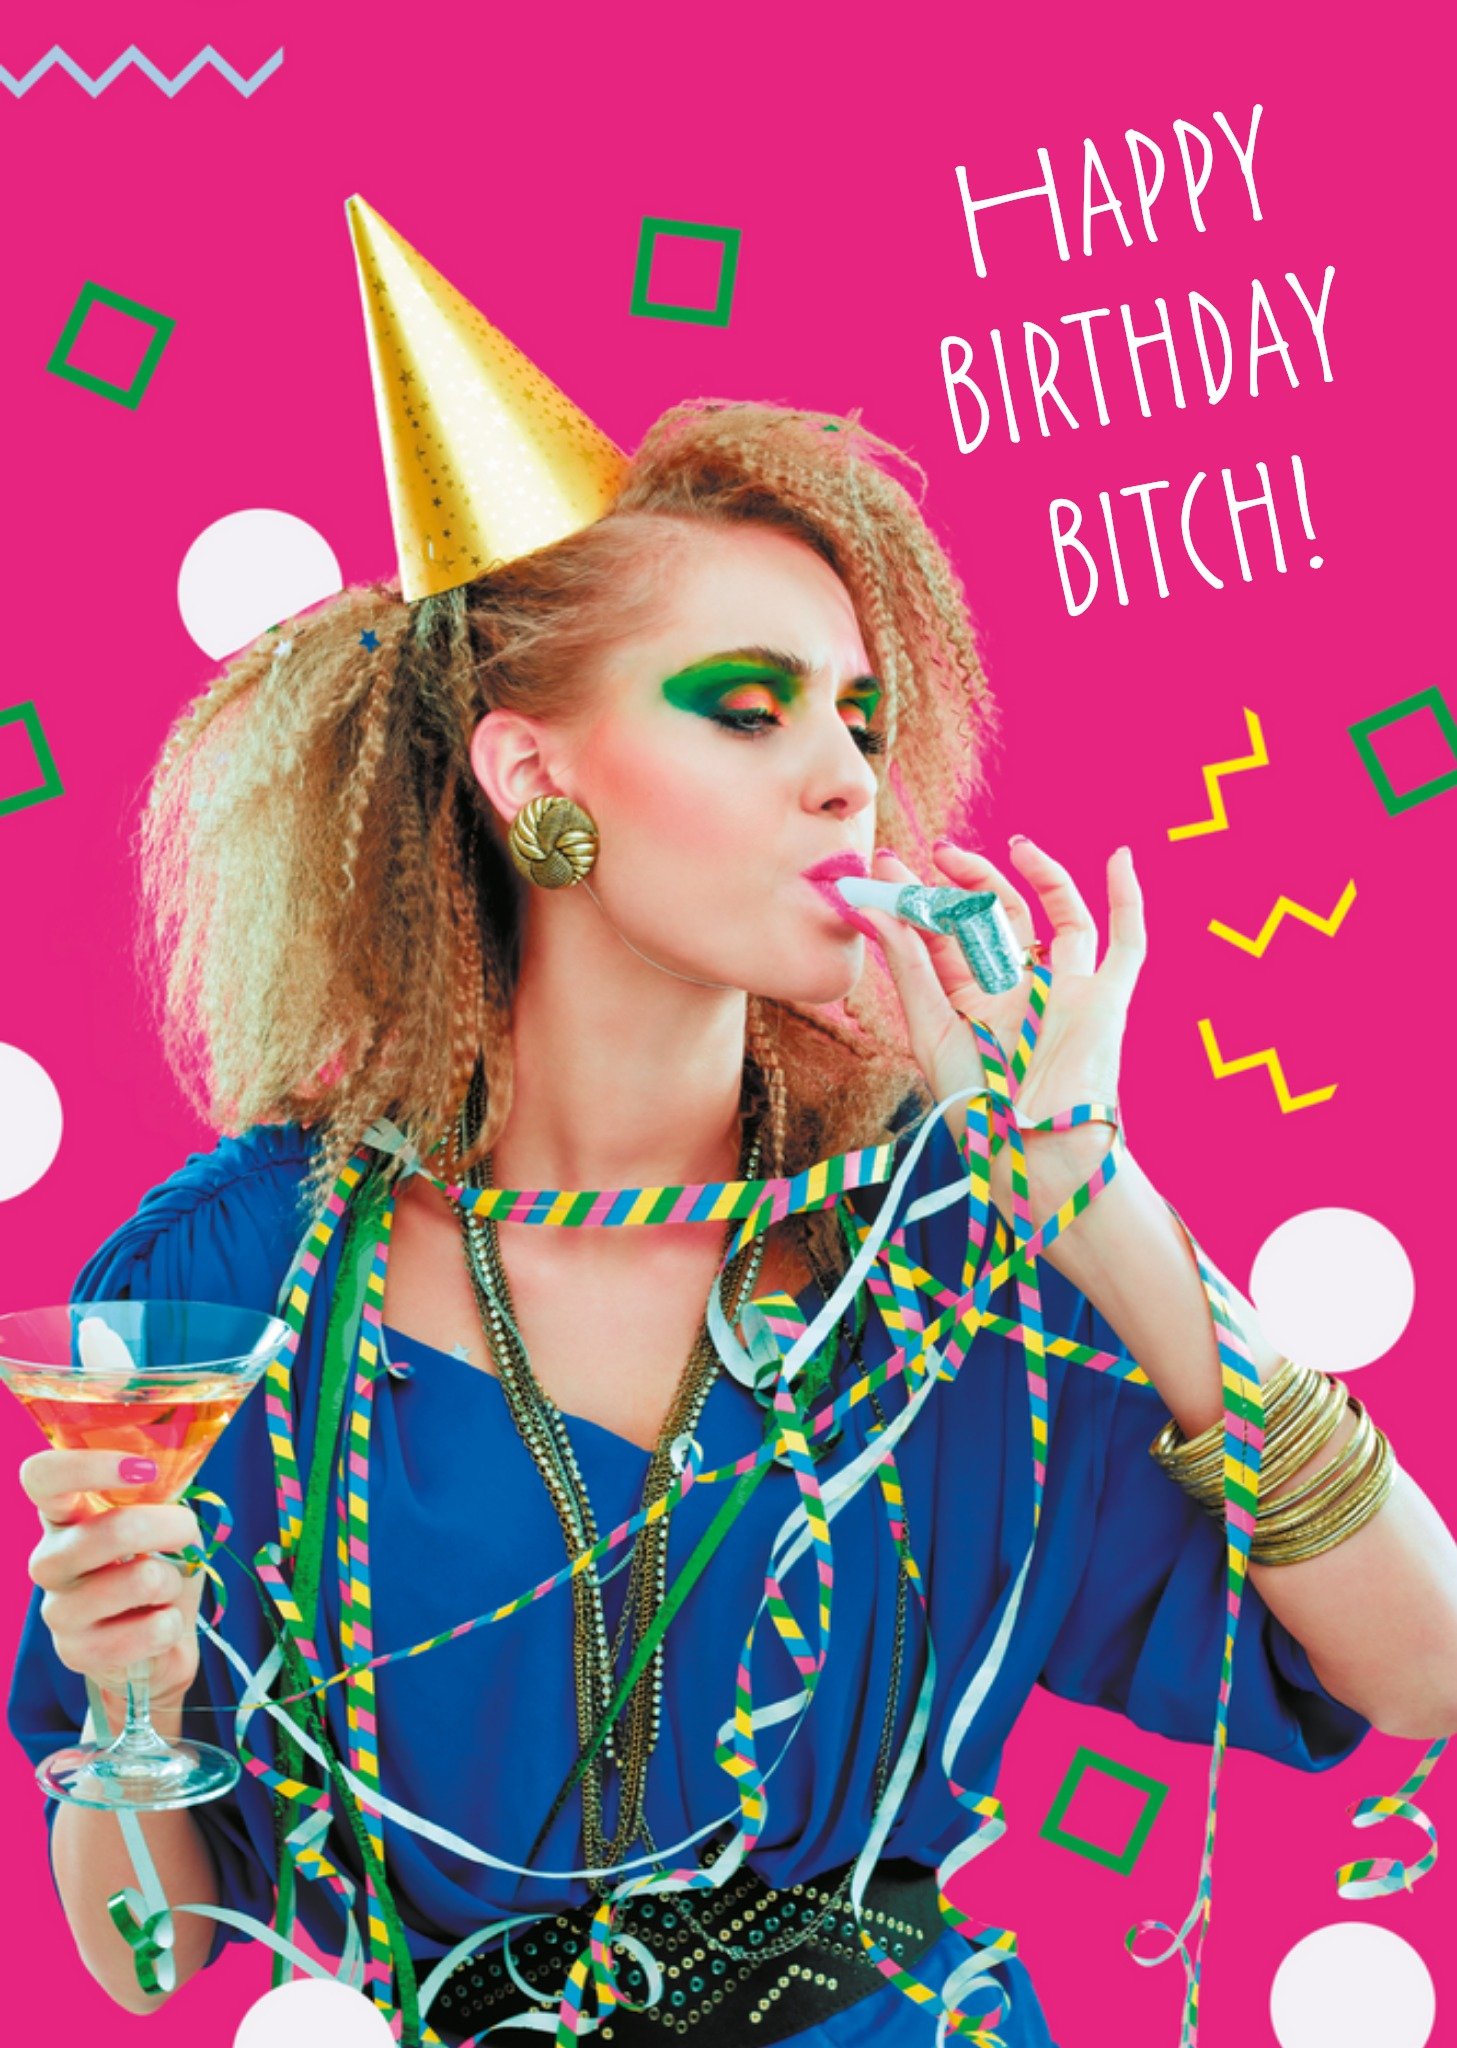 TMS - Verjaardagskaart - birthday bitch